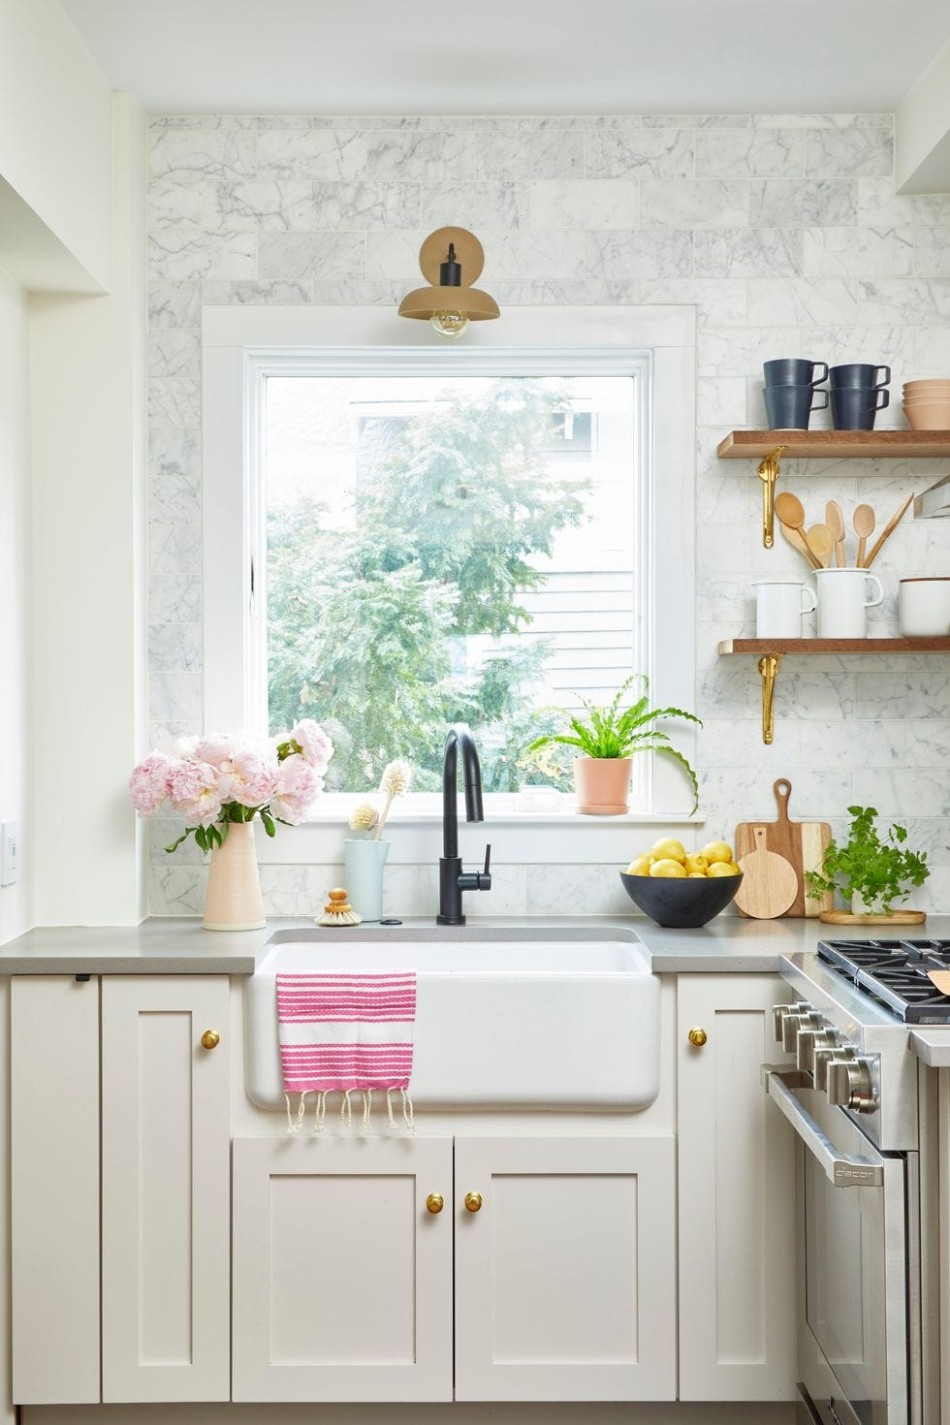 4 Best Small Kitchen Design Ideas - Tiny Kitchen Decorating - small kitchens designs ideas